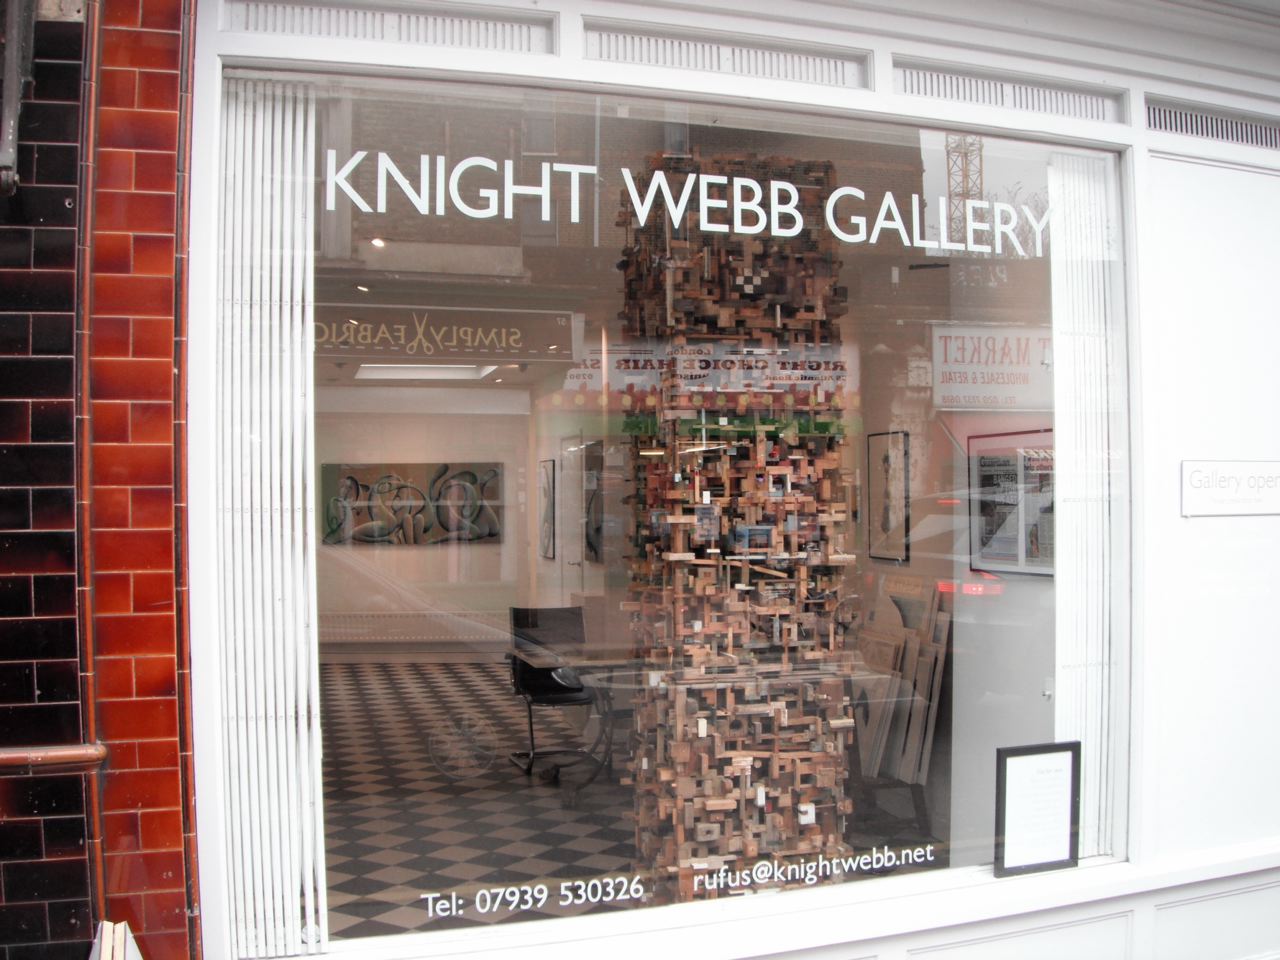 The Knight Webb Gallery on Atlantic Road